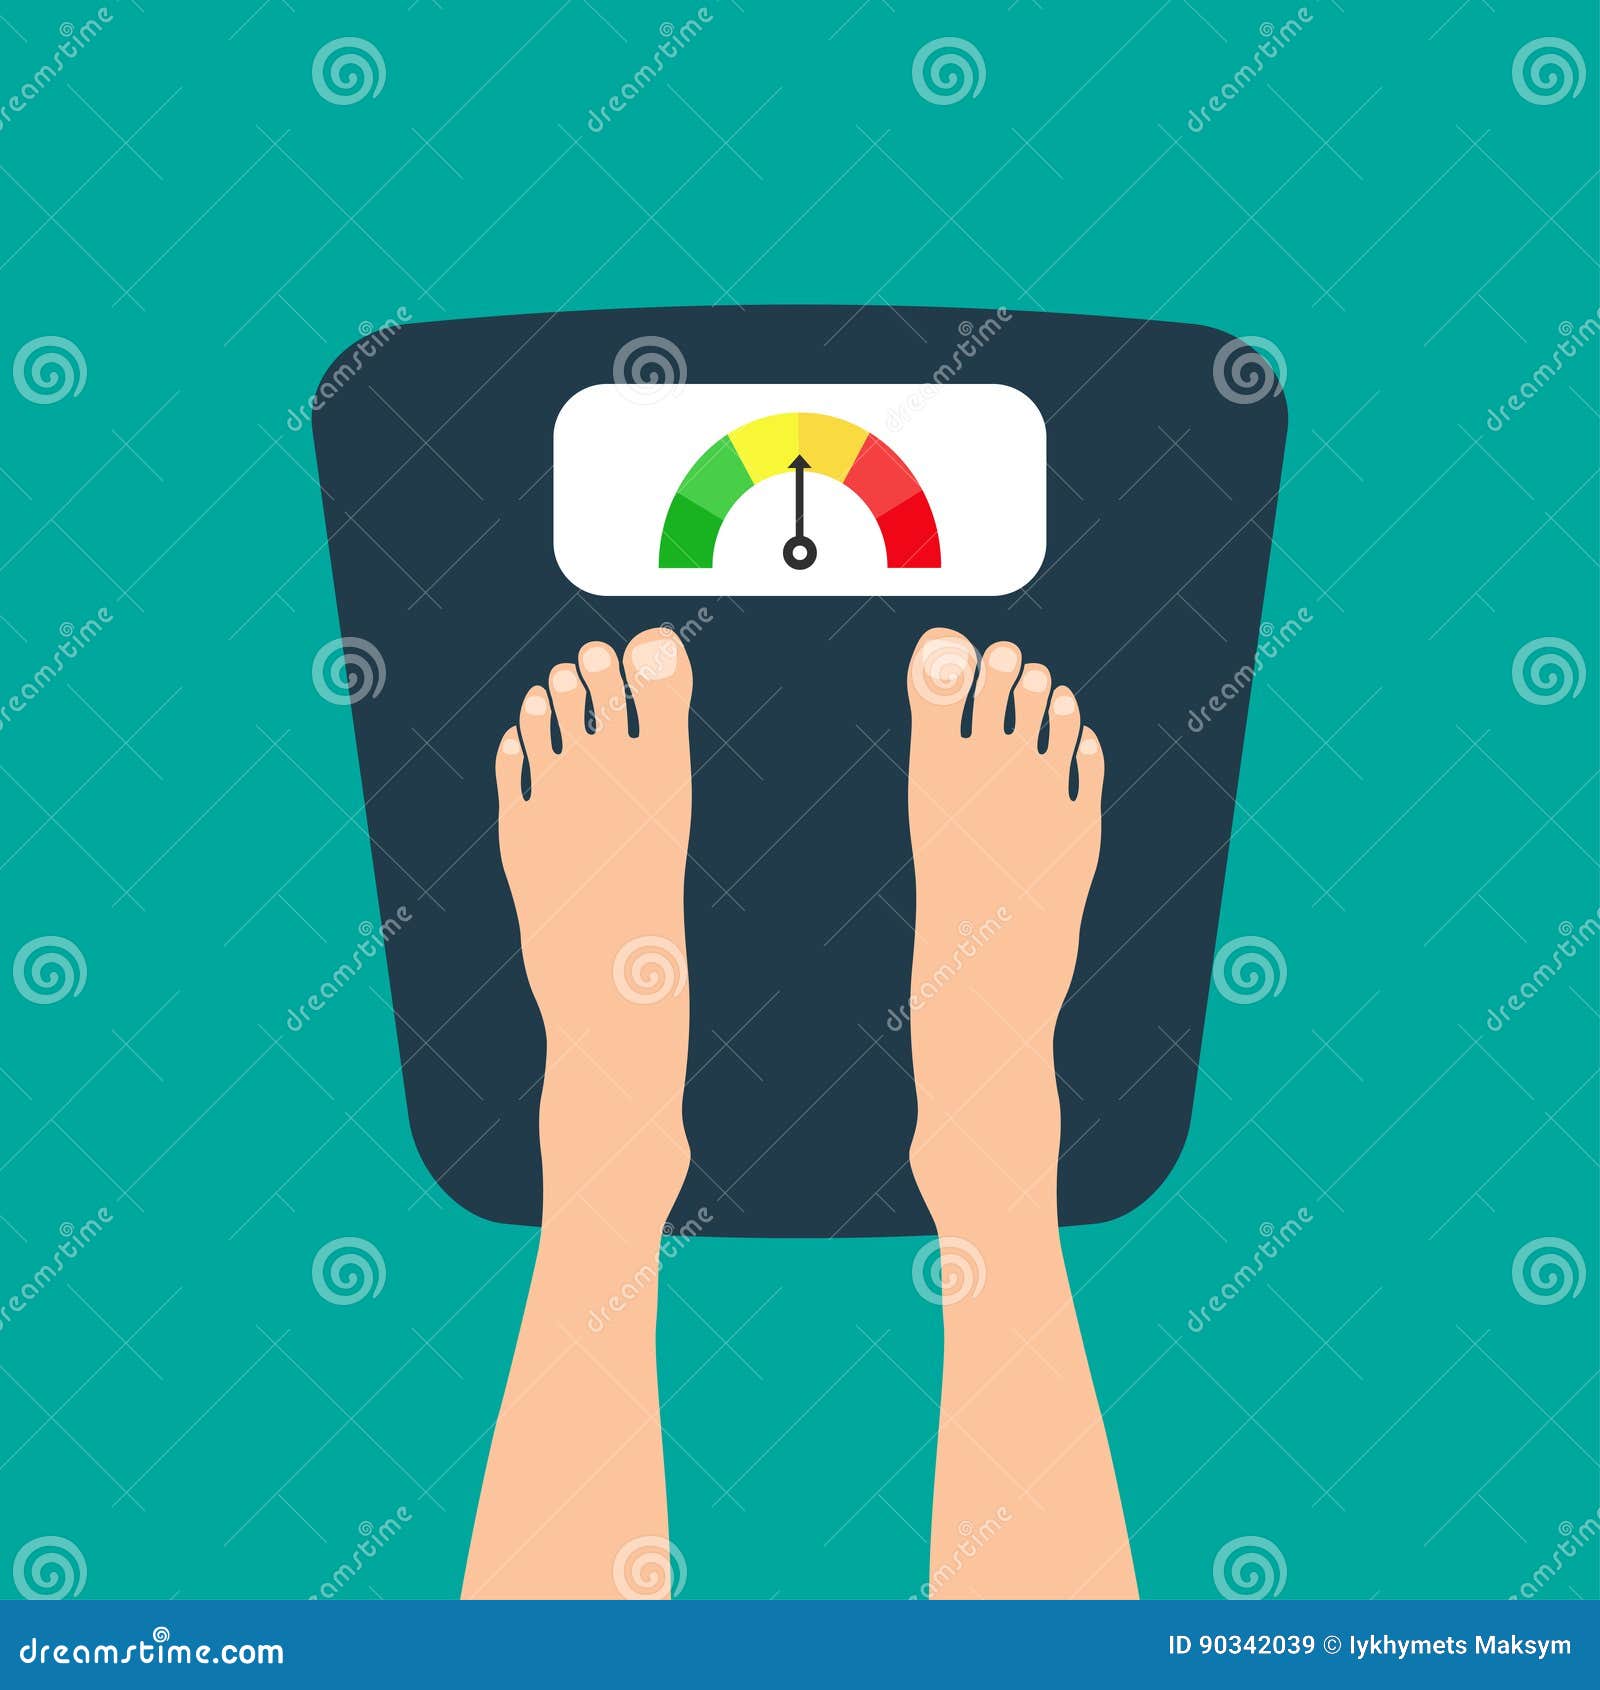 feet on weighing machine